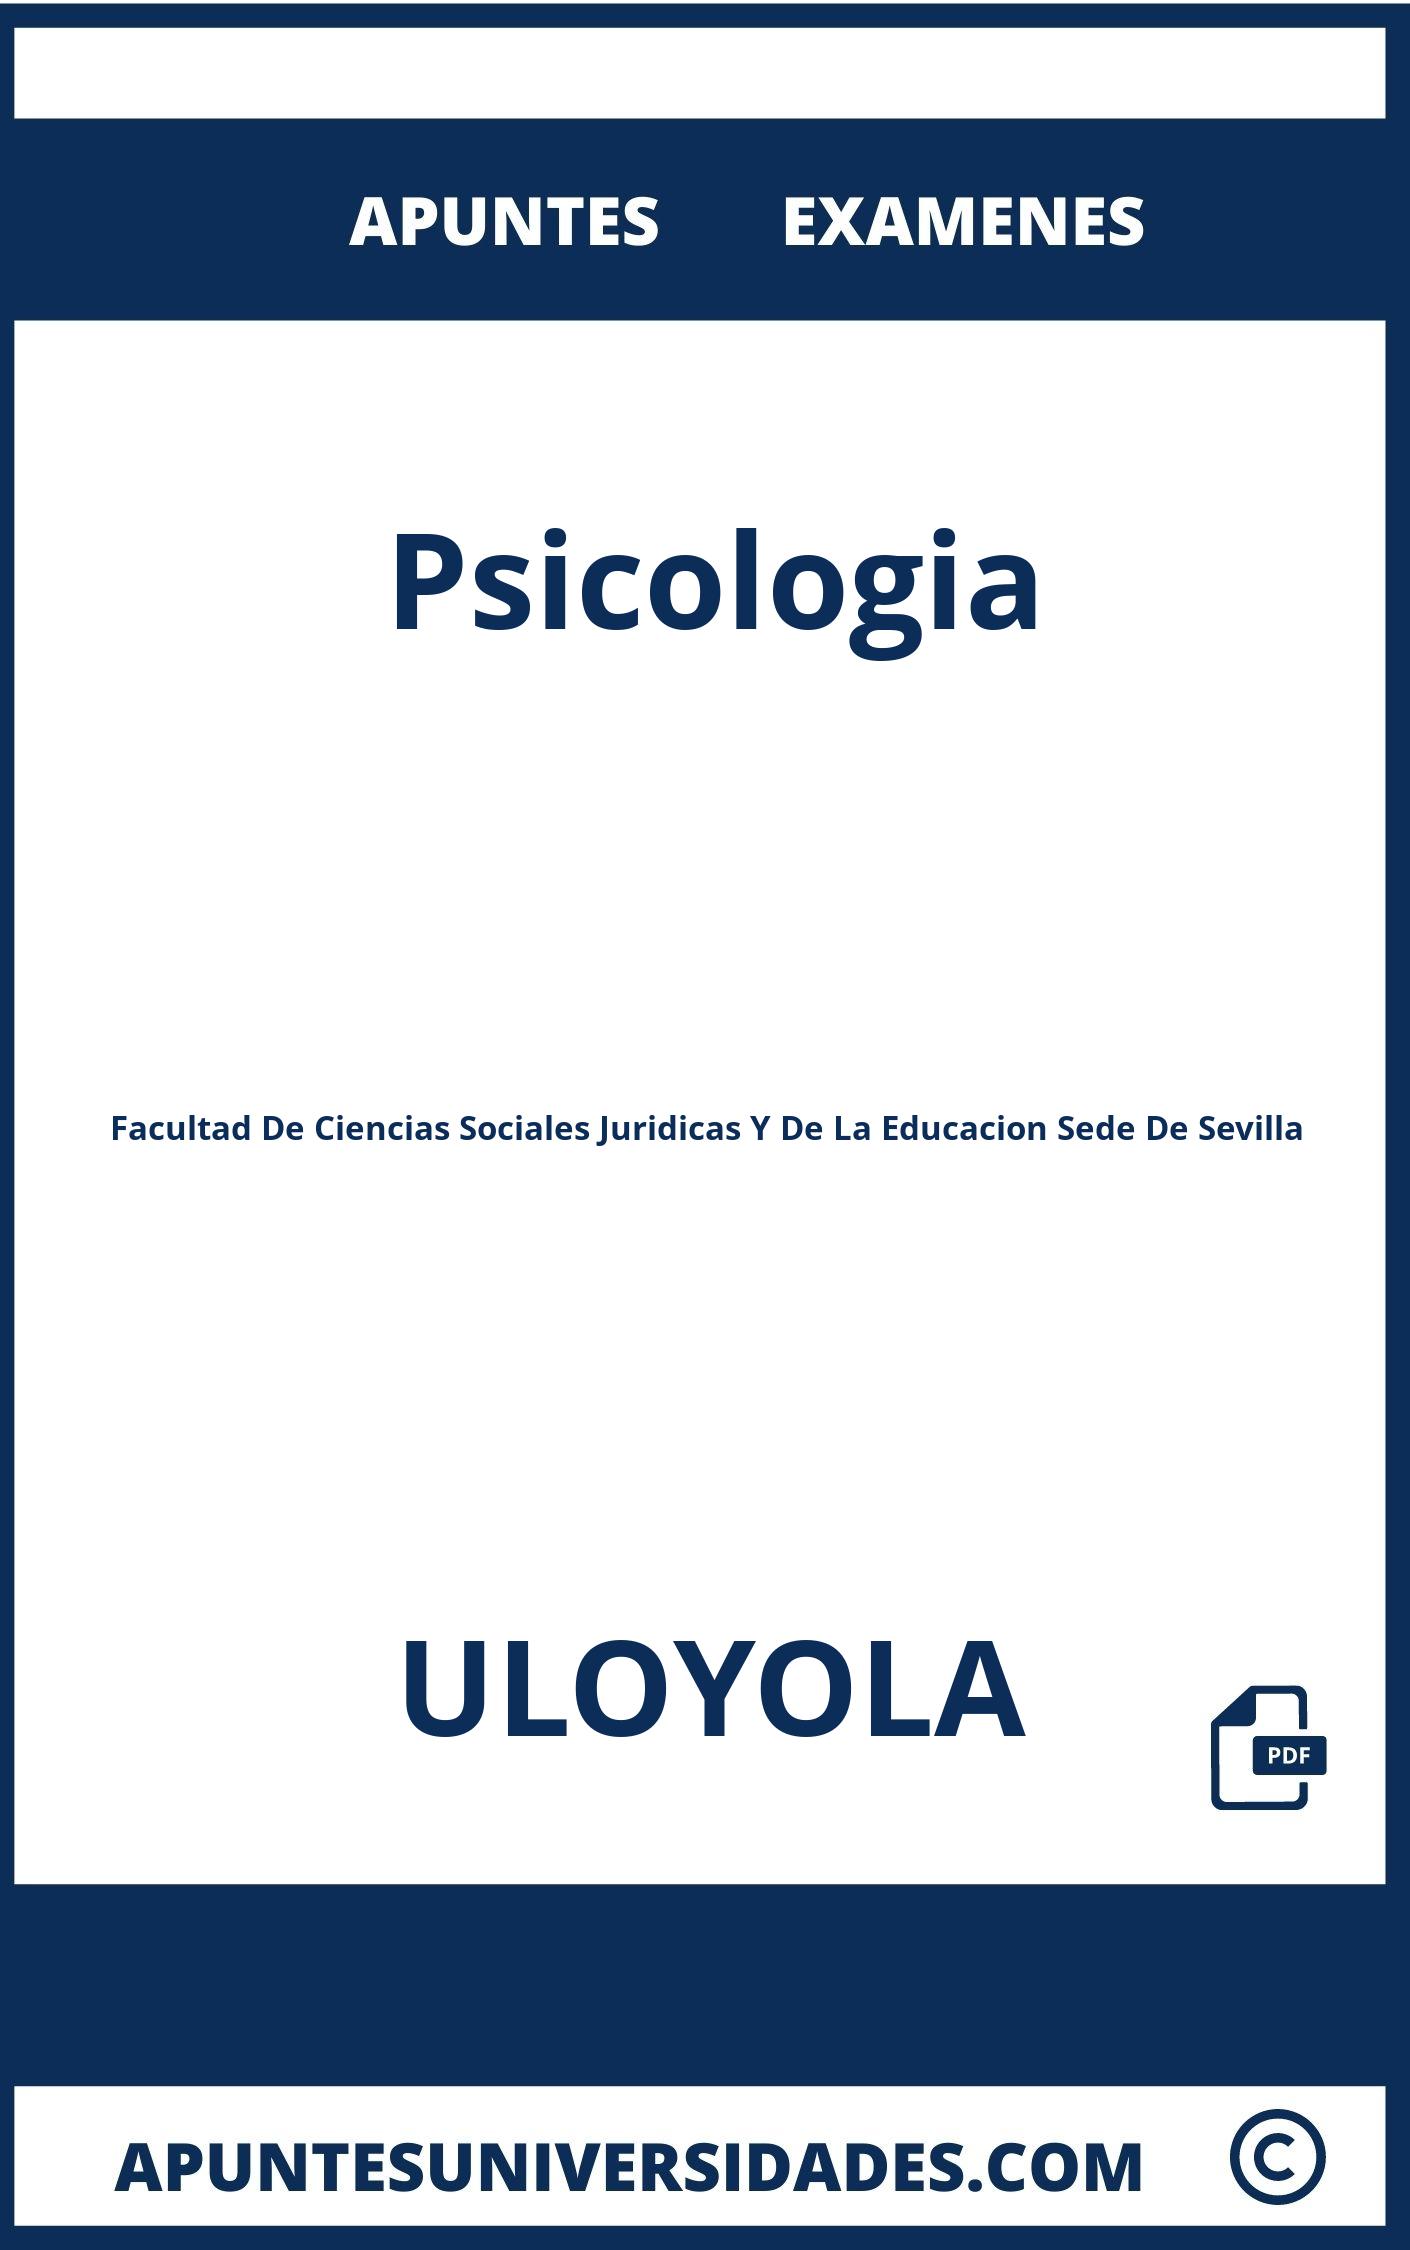 Apuntes Examenes Psicologia ULOYOLA